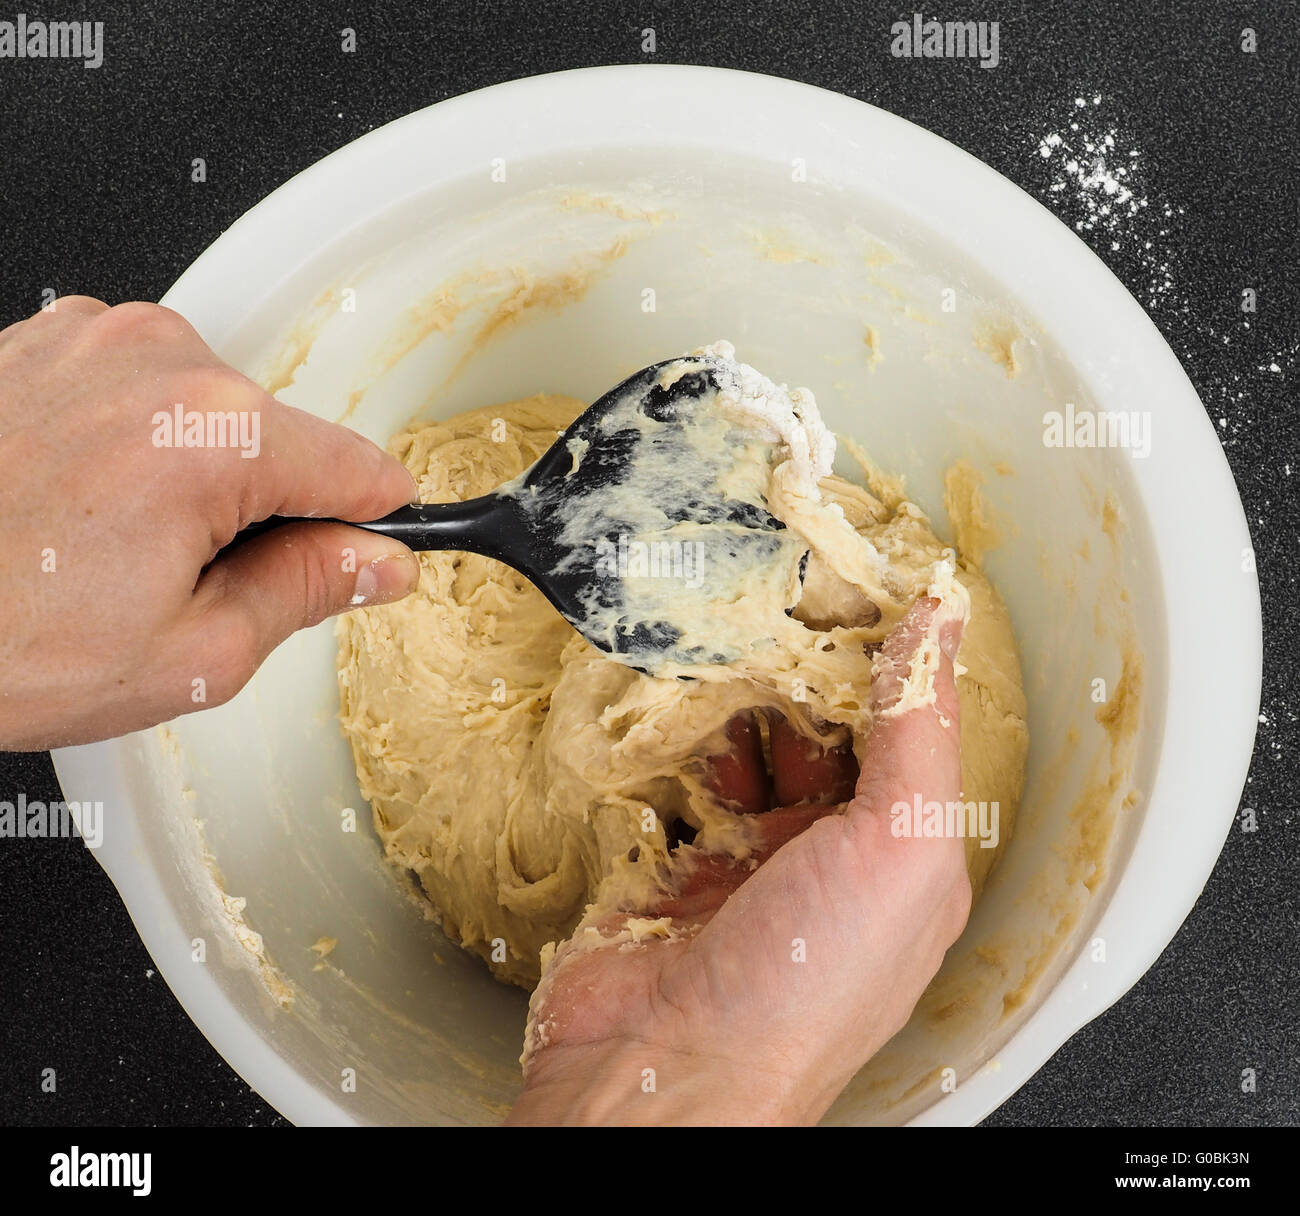 Handling sticky dough Stock Photo